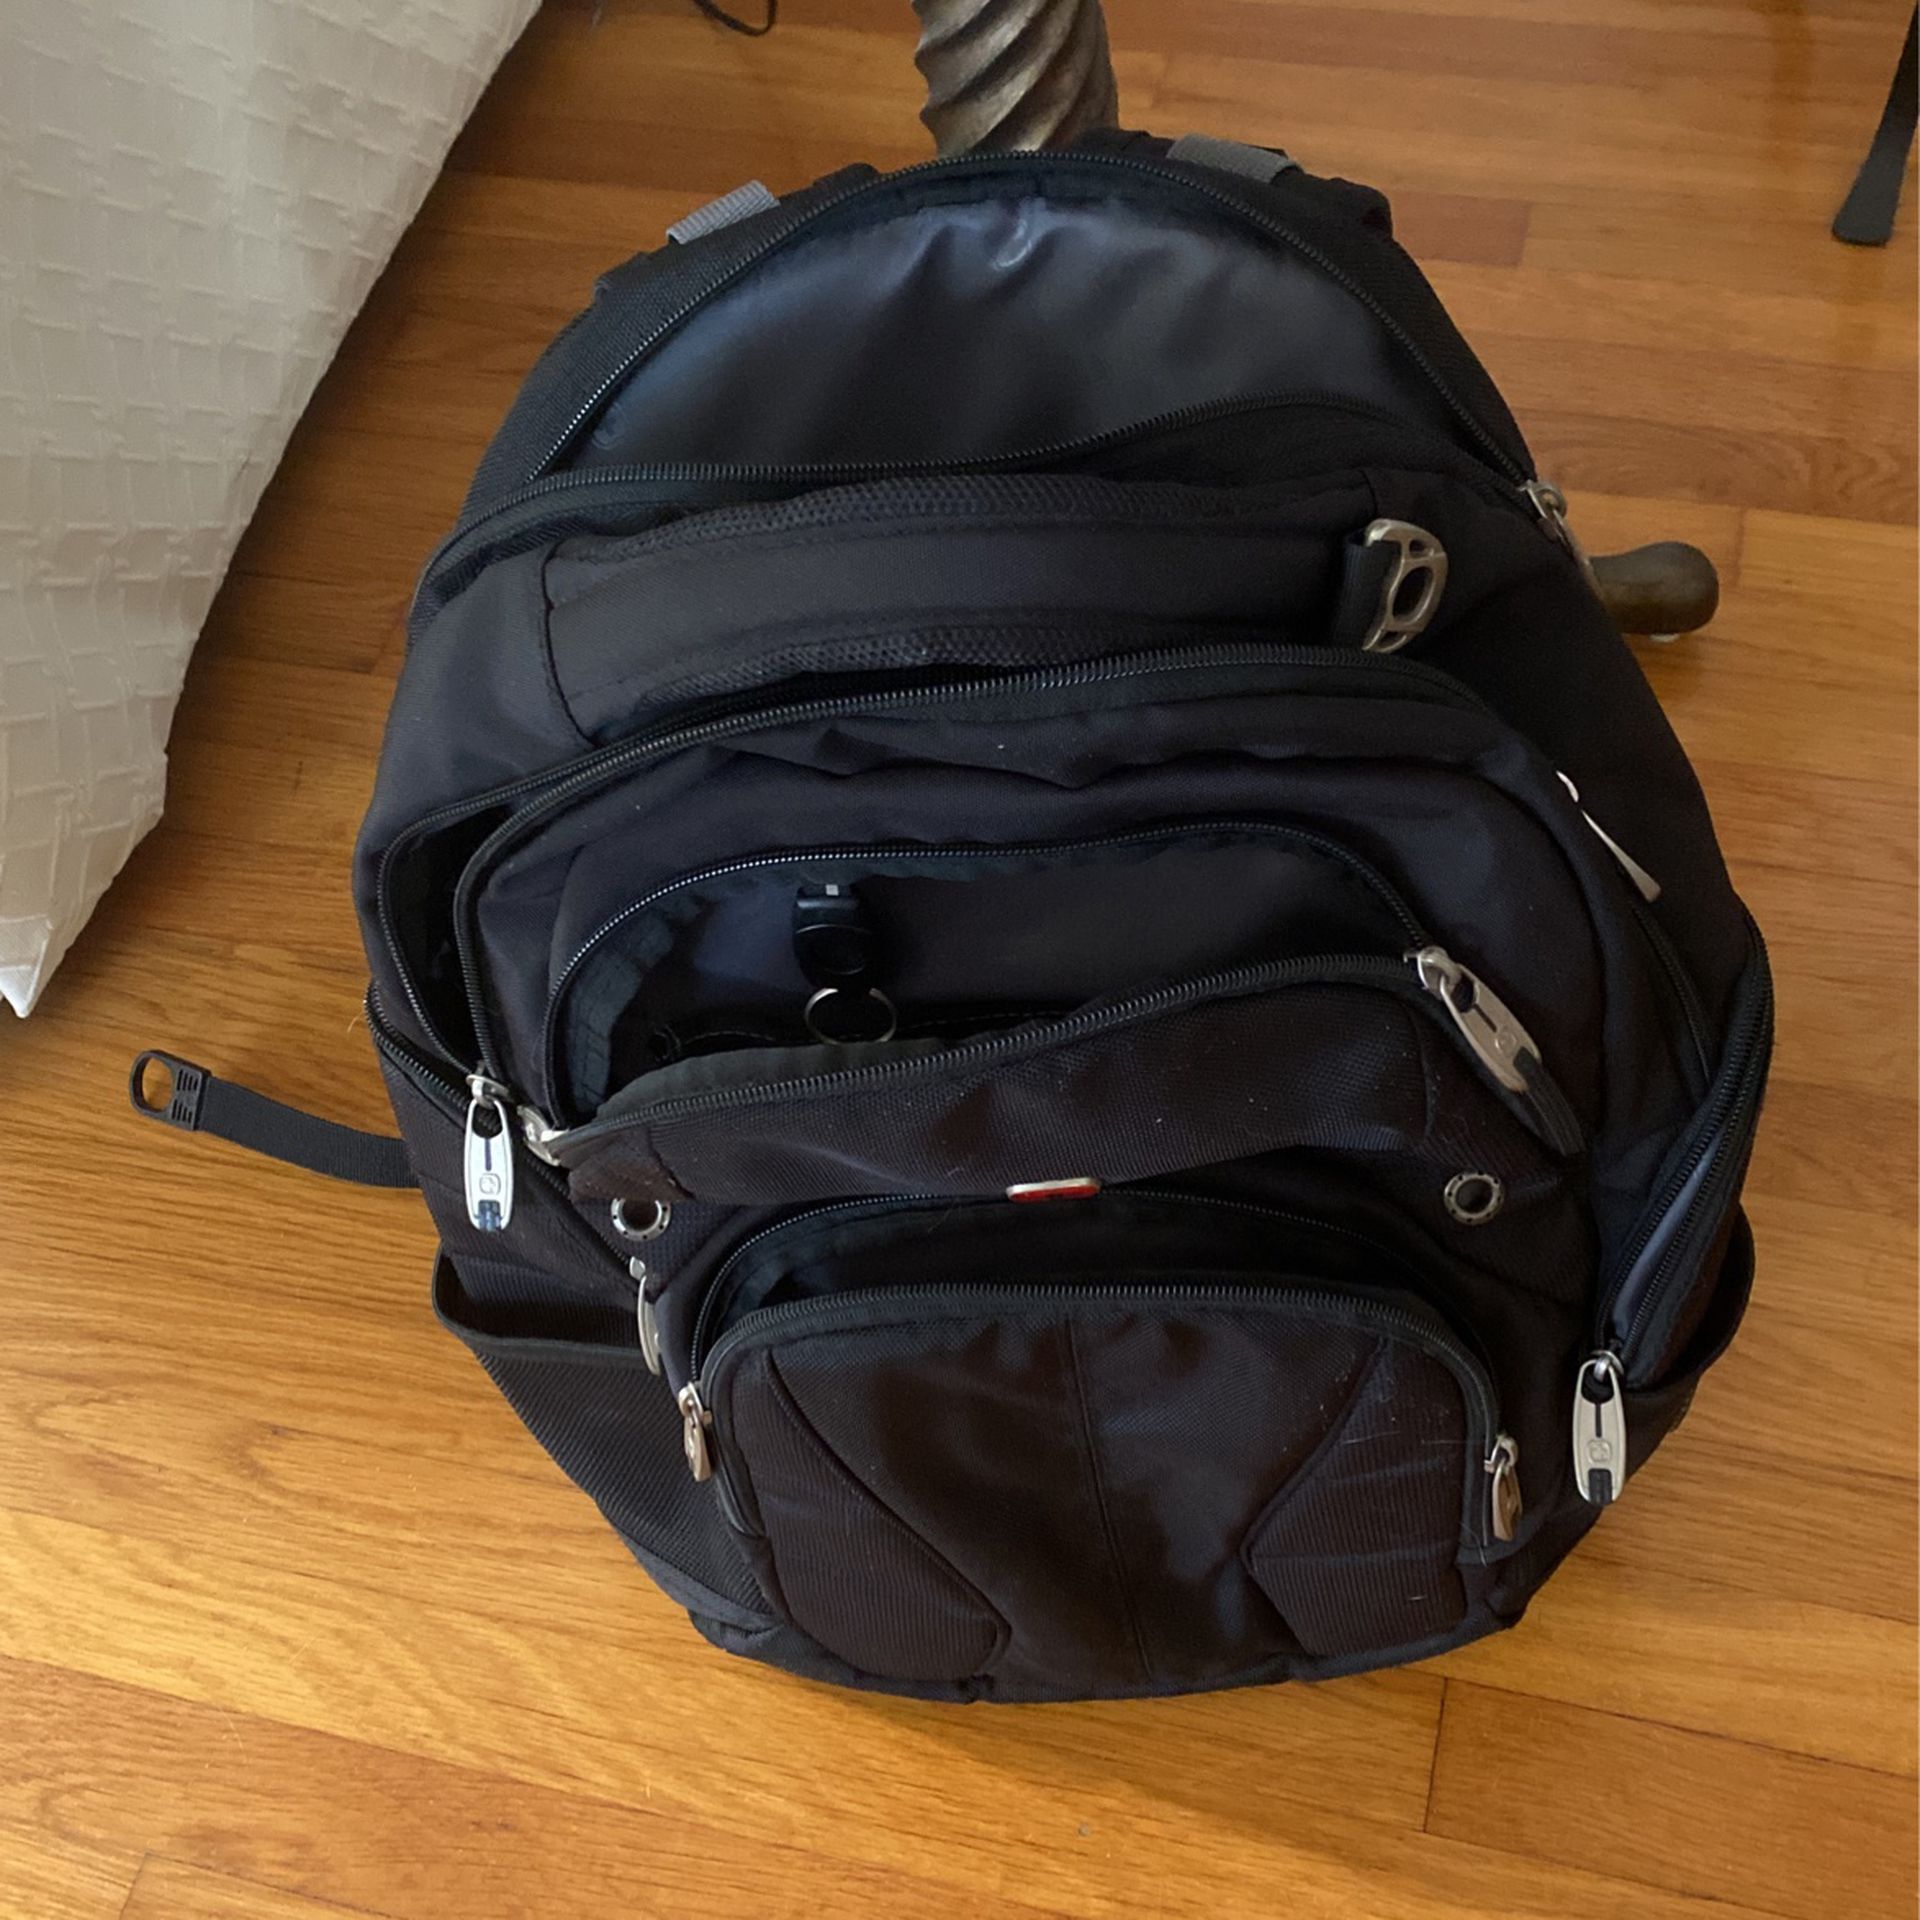 Swissgear Backpack,like new!